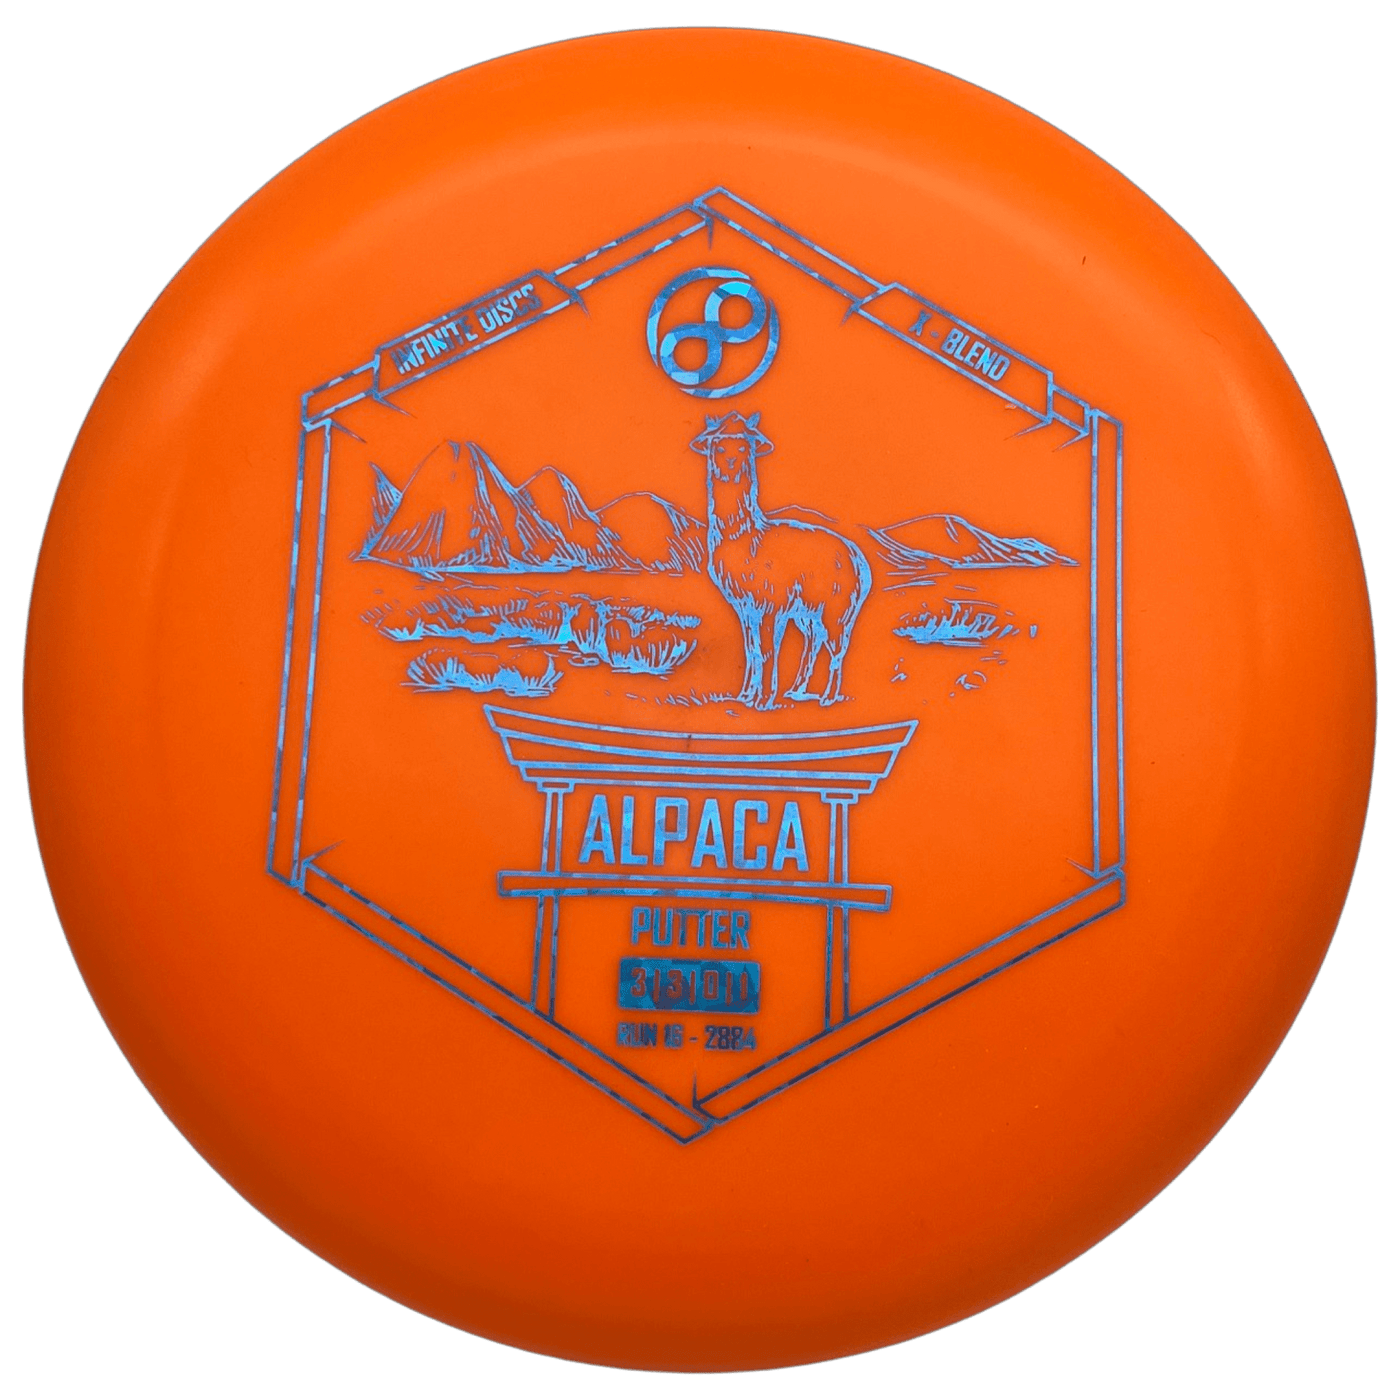 Infinite Putter Orange - Blue Shatter - 175g Infinite Discs Alpaca (X-Blend)